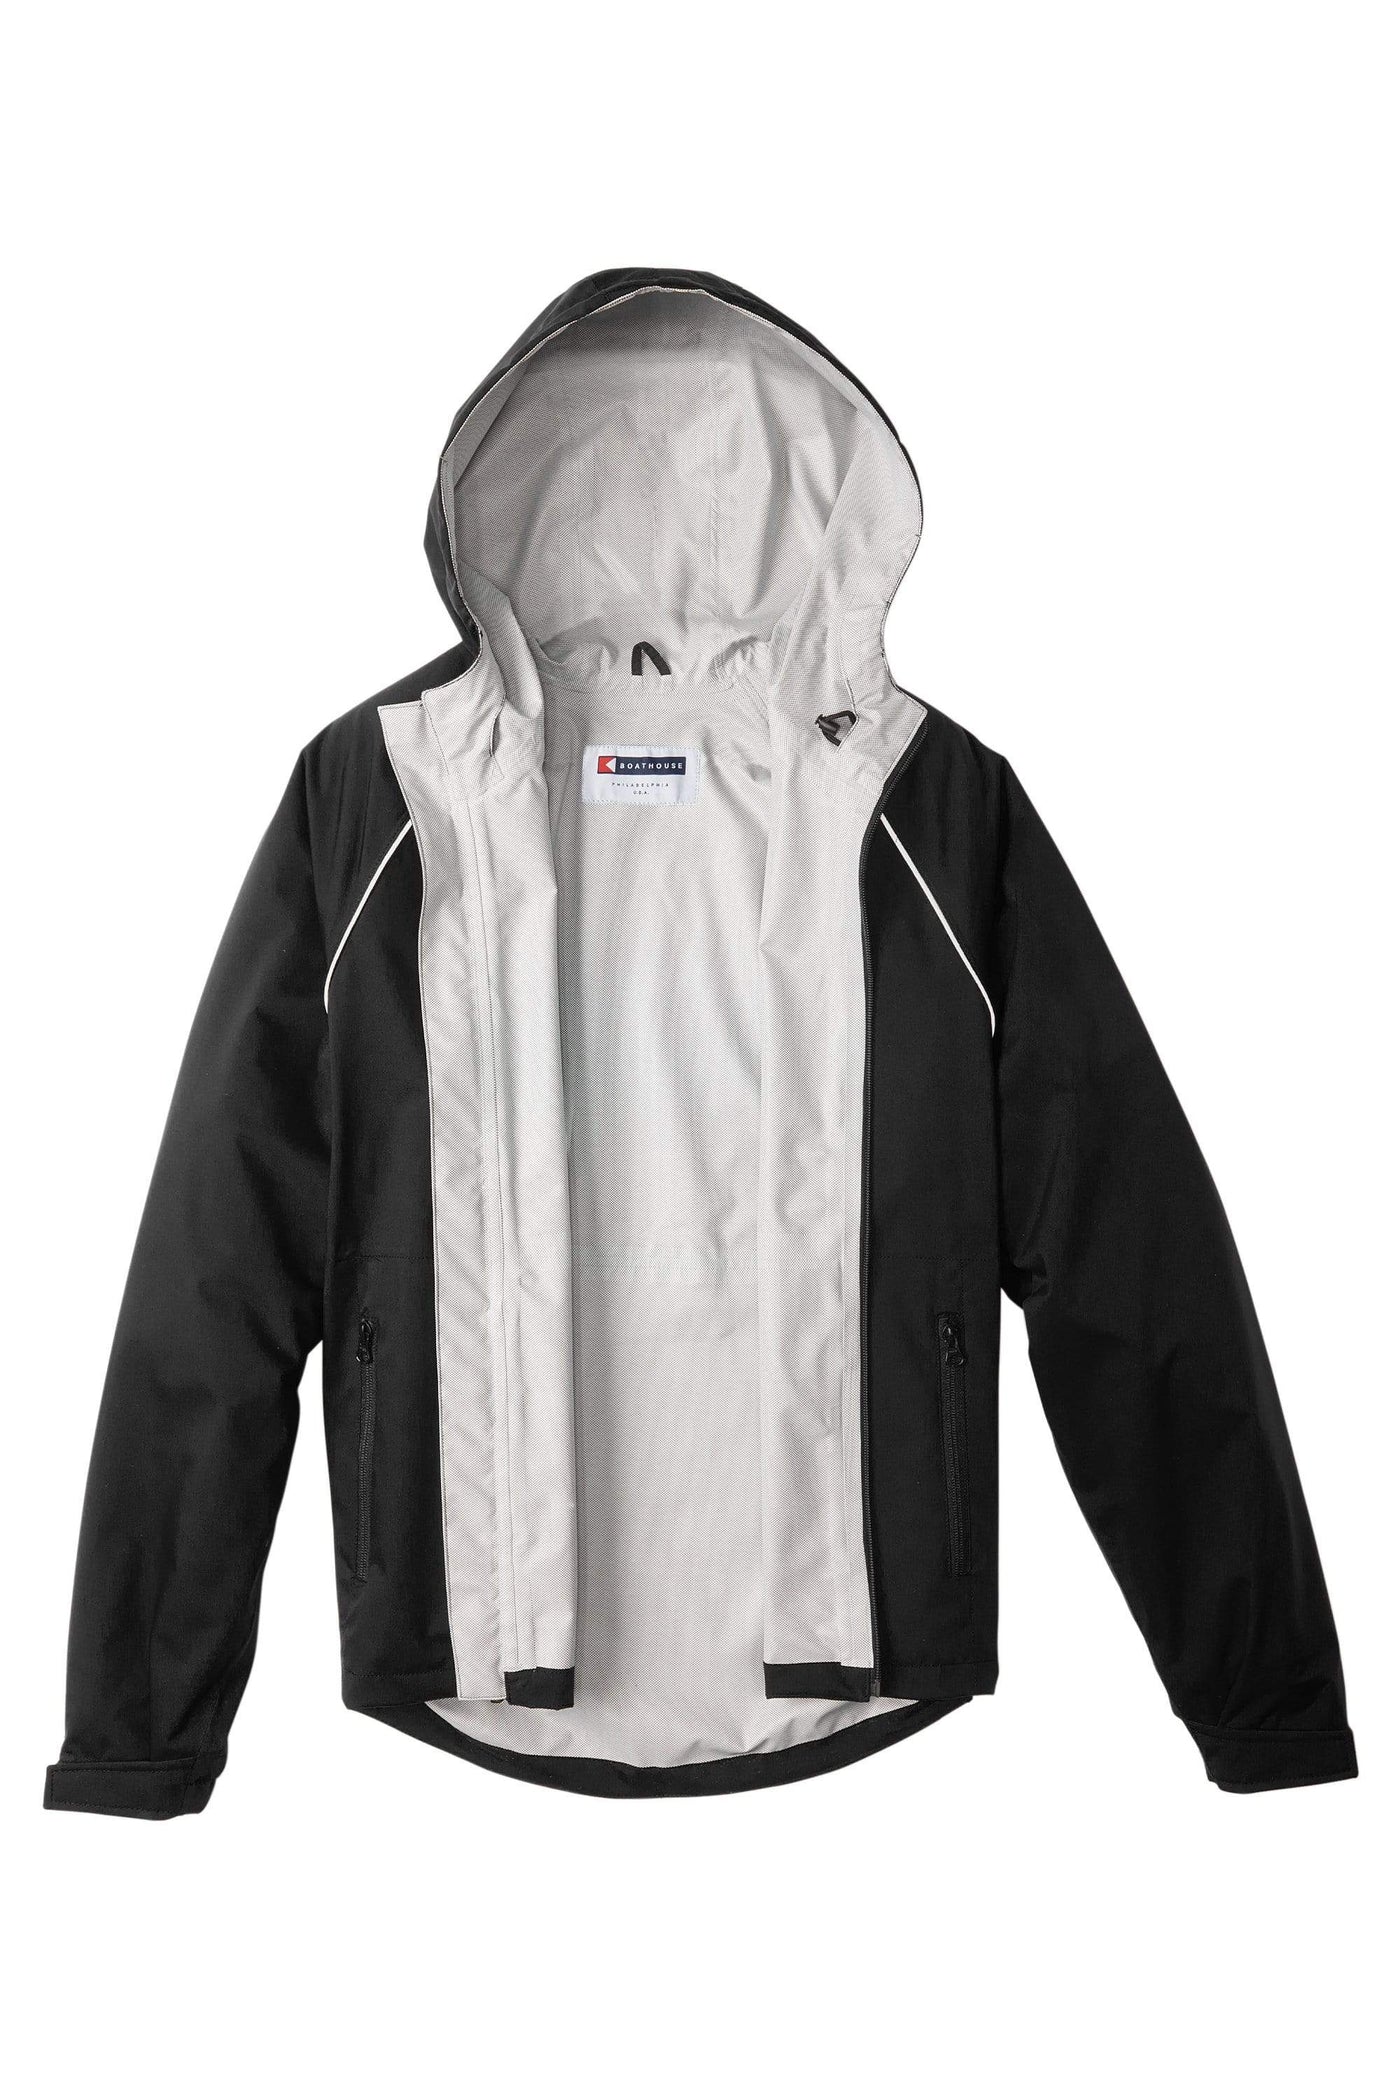 BOATHOUSE True North Unisex Waterproof Jacket